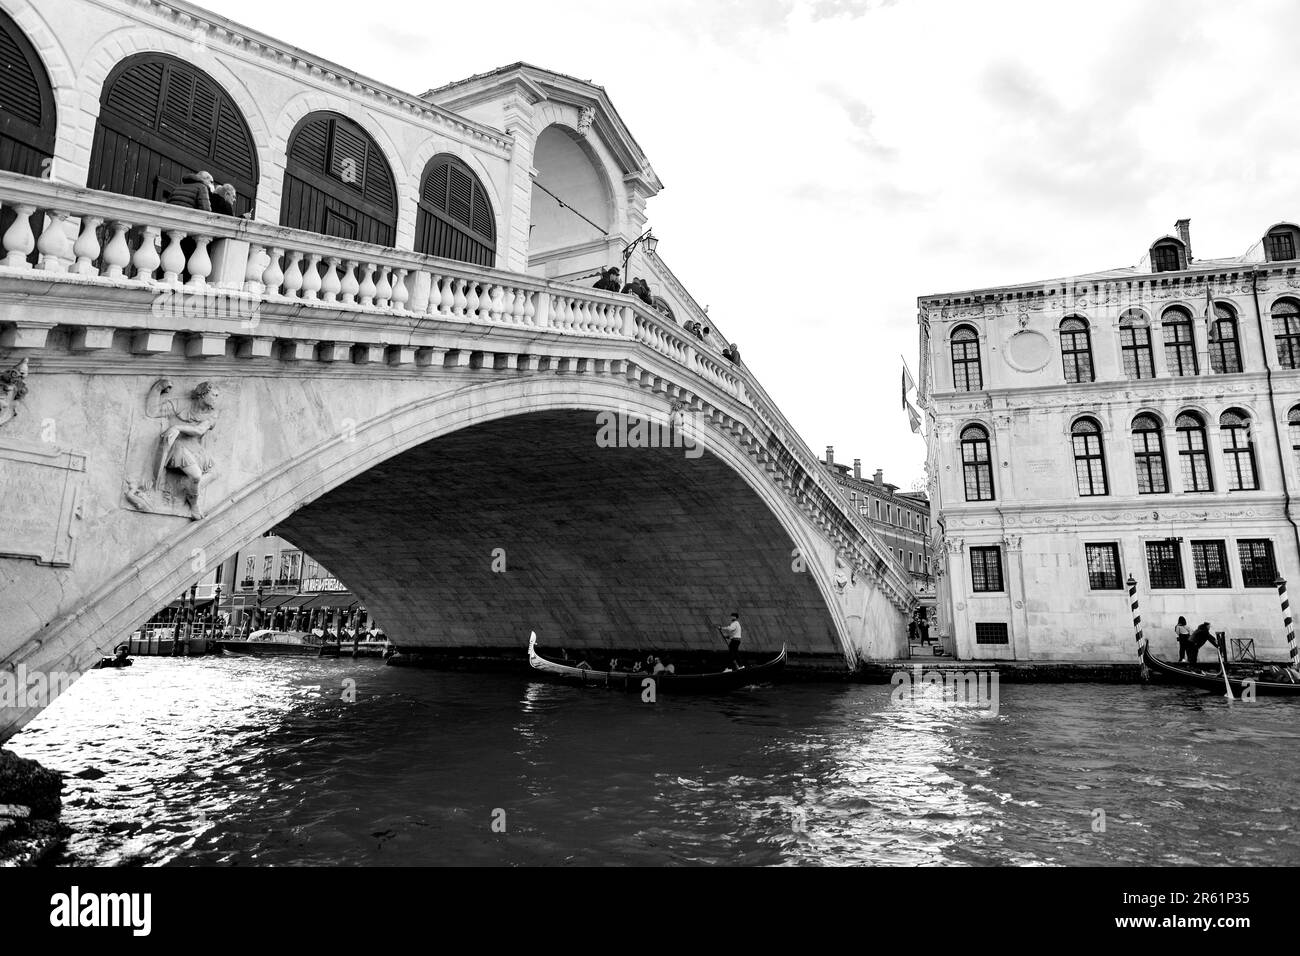 Venice, Italy - April 2, 2022: The famous Rialto Bridge over the Grand Canal in Venice, Veneto, Italy. Stock Photo